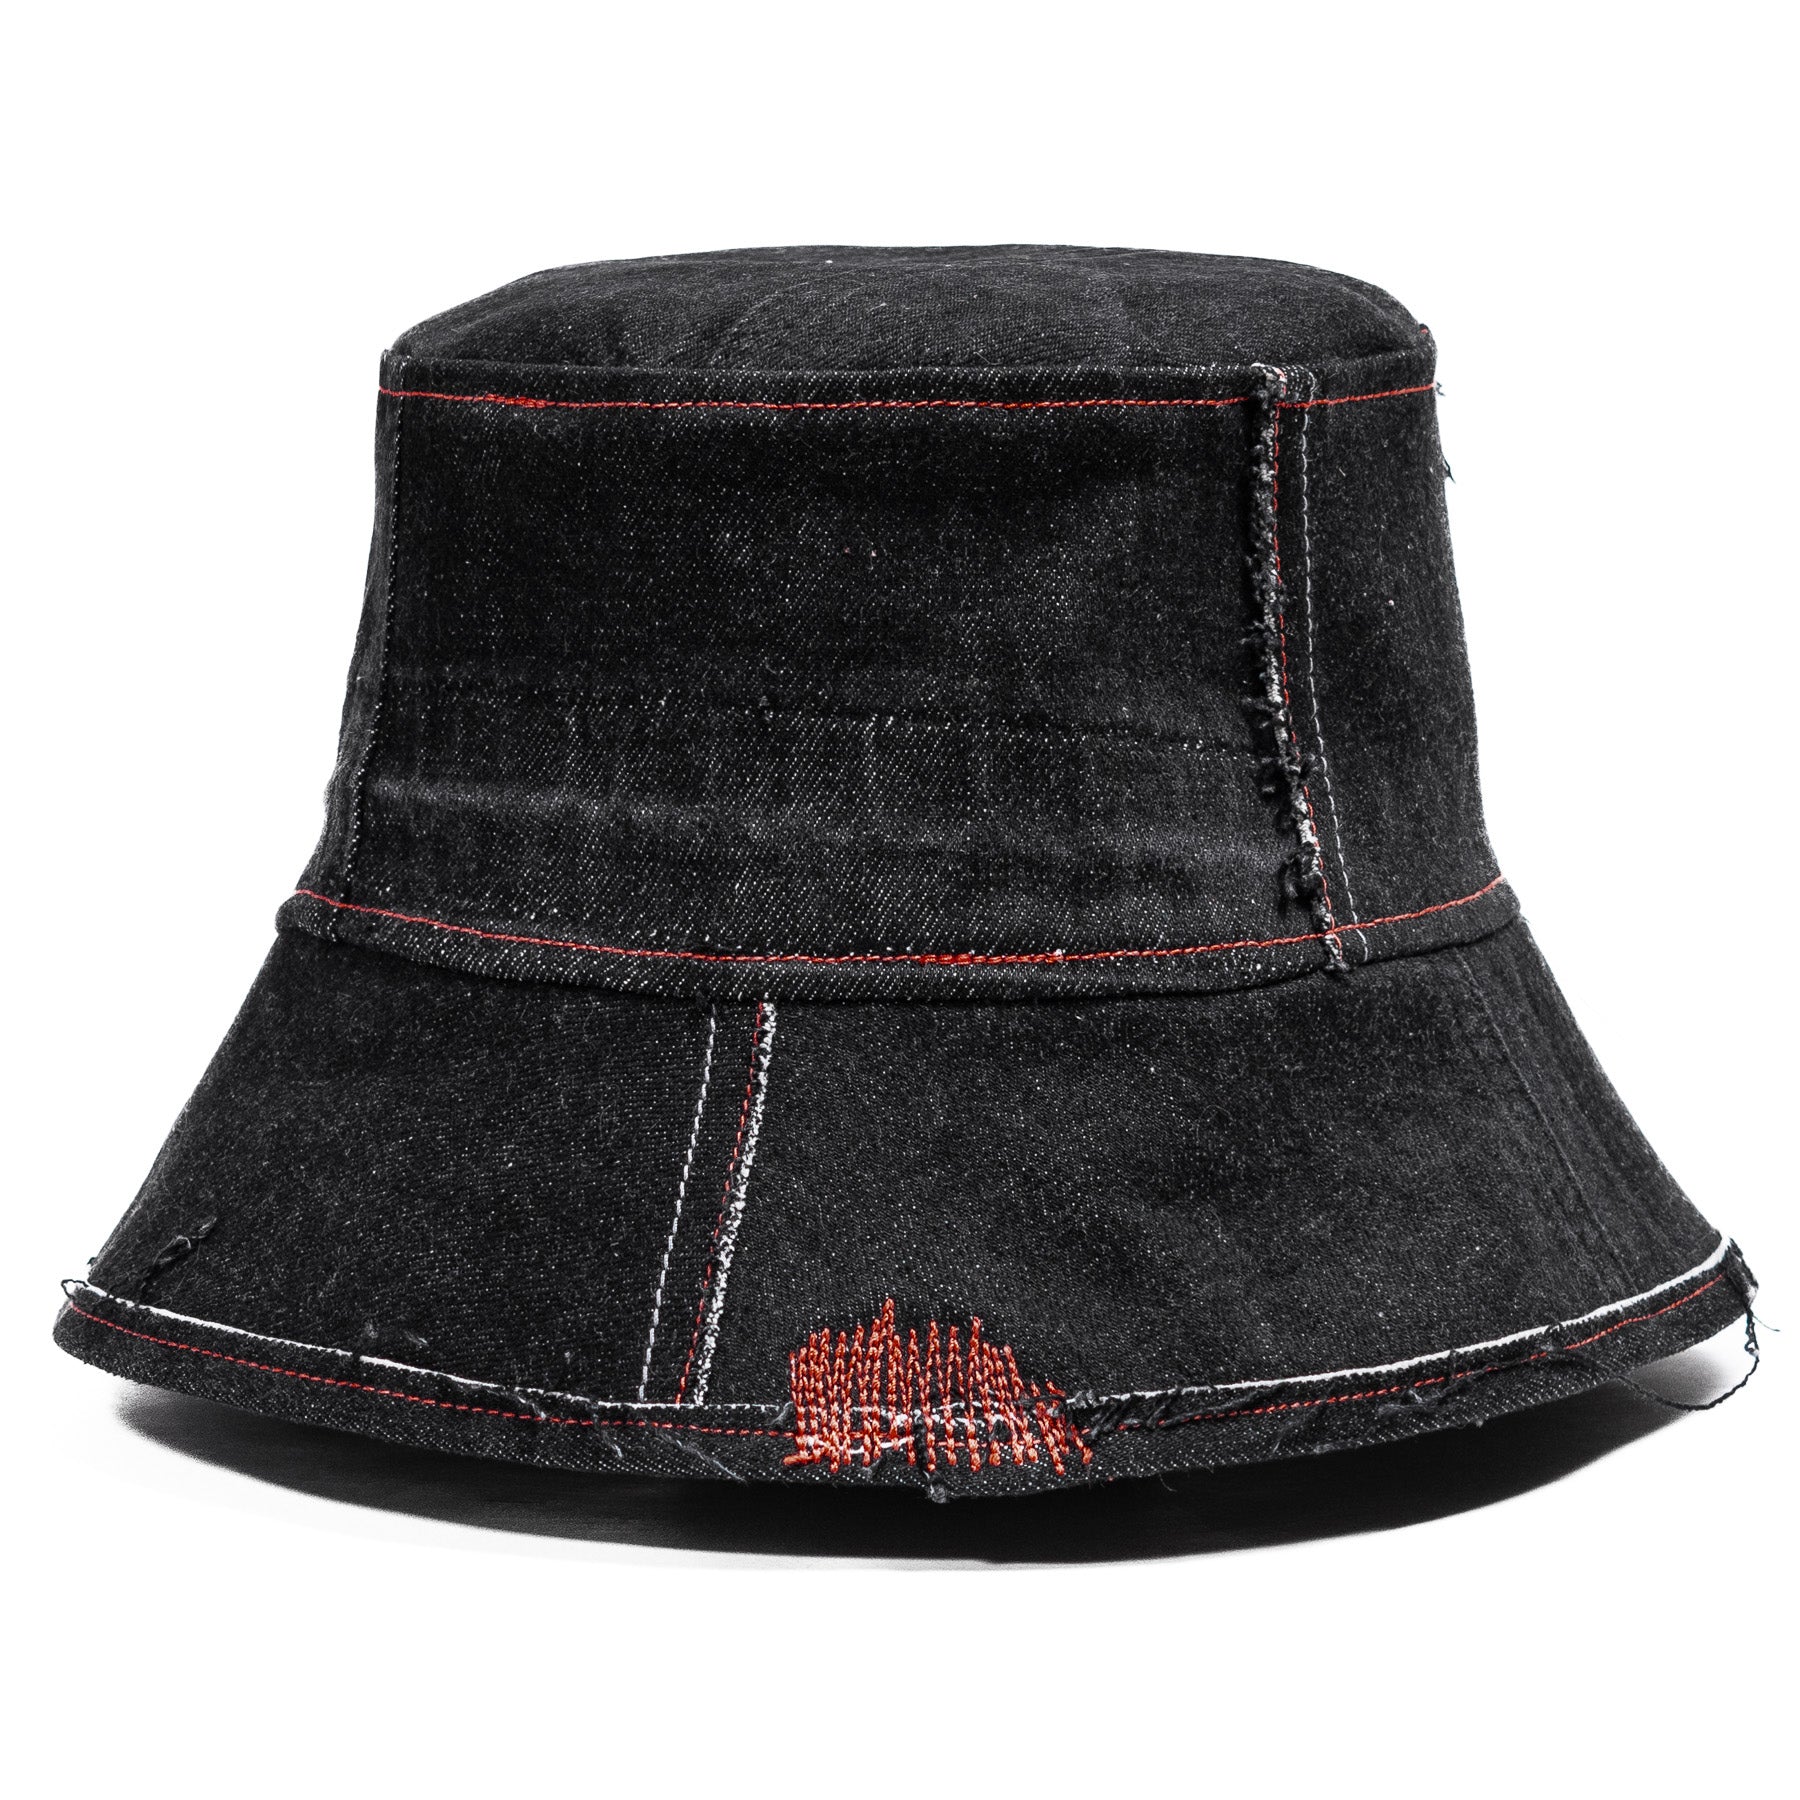 Mursaki Denim Chop Shop Bucket Hat - Rinsed Black